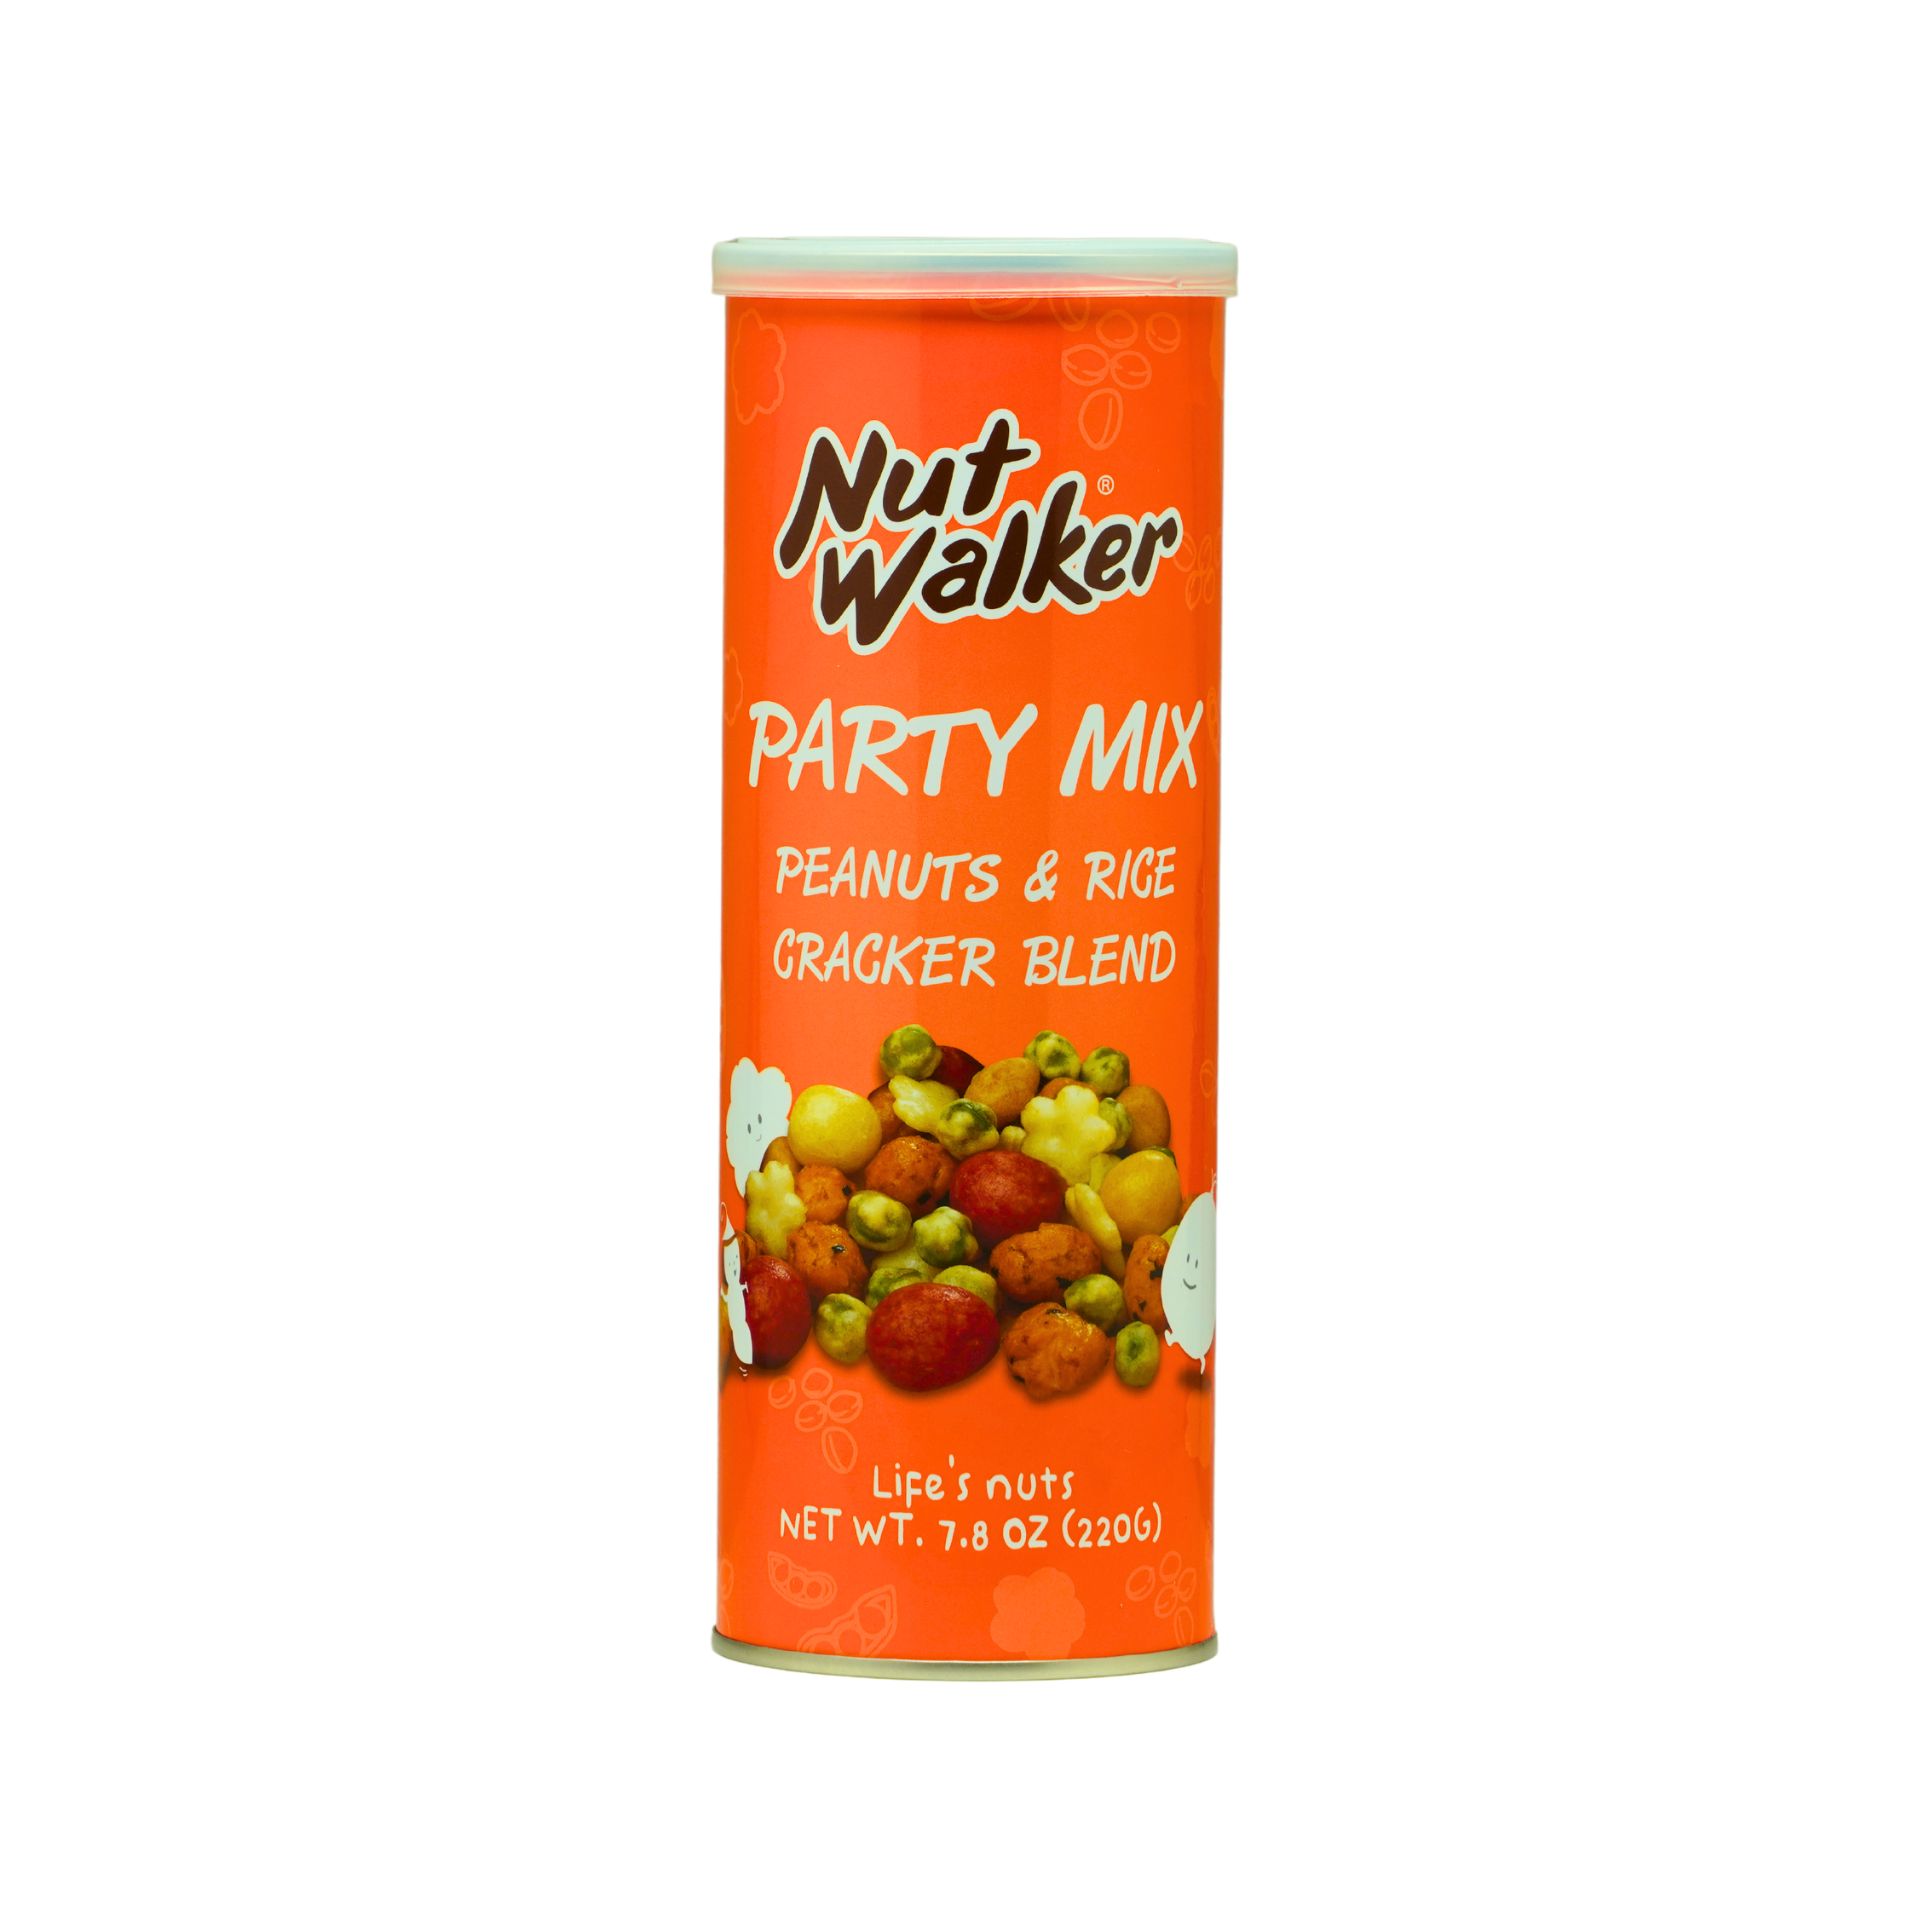 Nutwalker Party Mix Peanut & Rice Cracker Blend (220g)